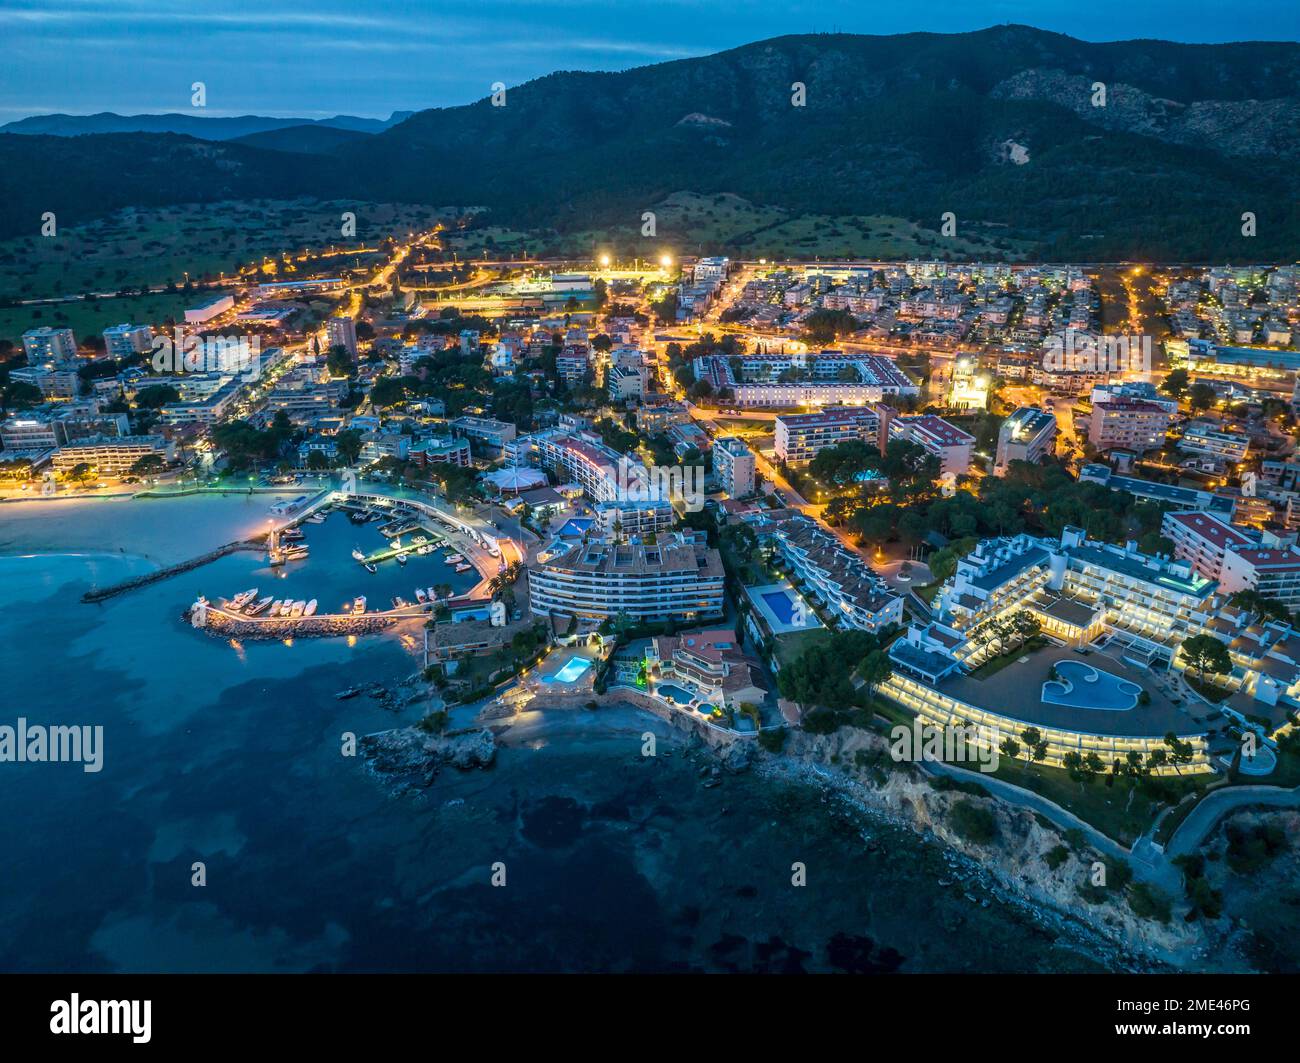 Spain, Balearic Islands, Santa Ponsa, Mallorca, Aerial view of illuminated seaside town at dusk Stock Photo